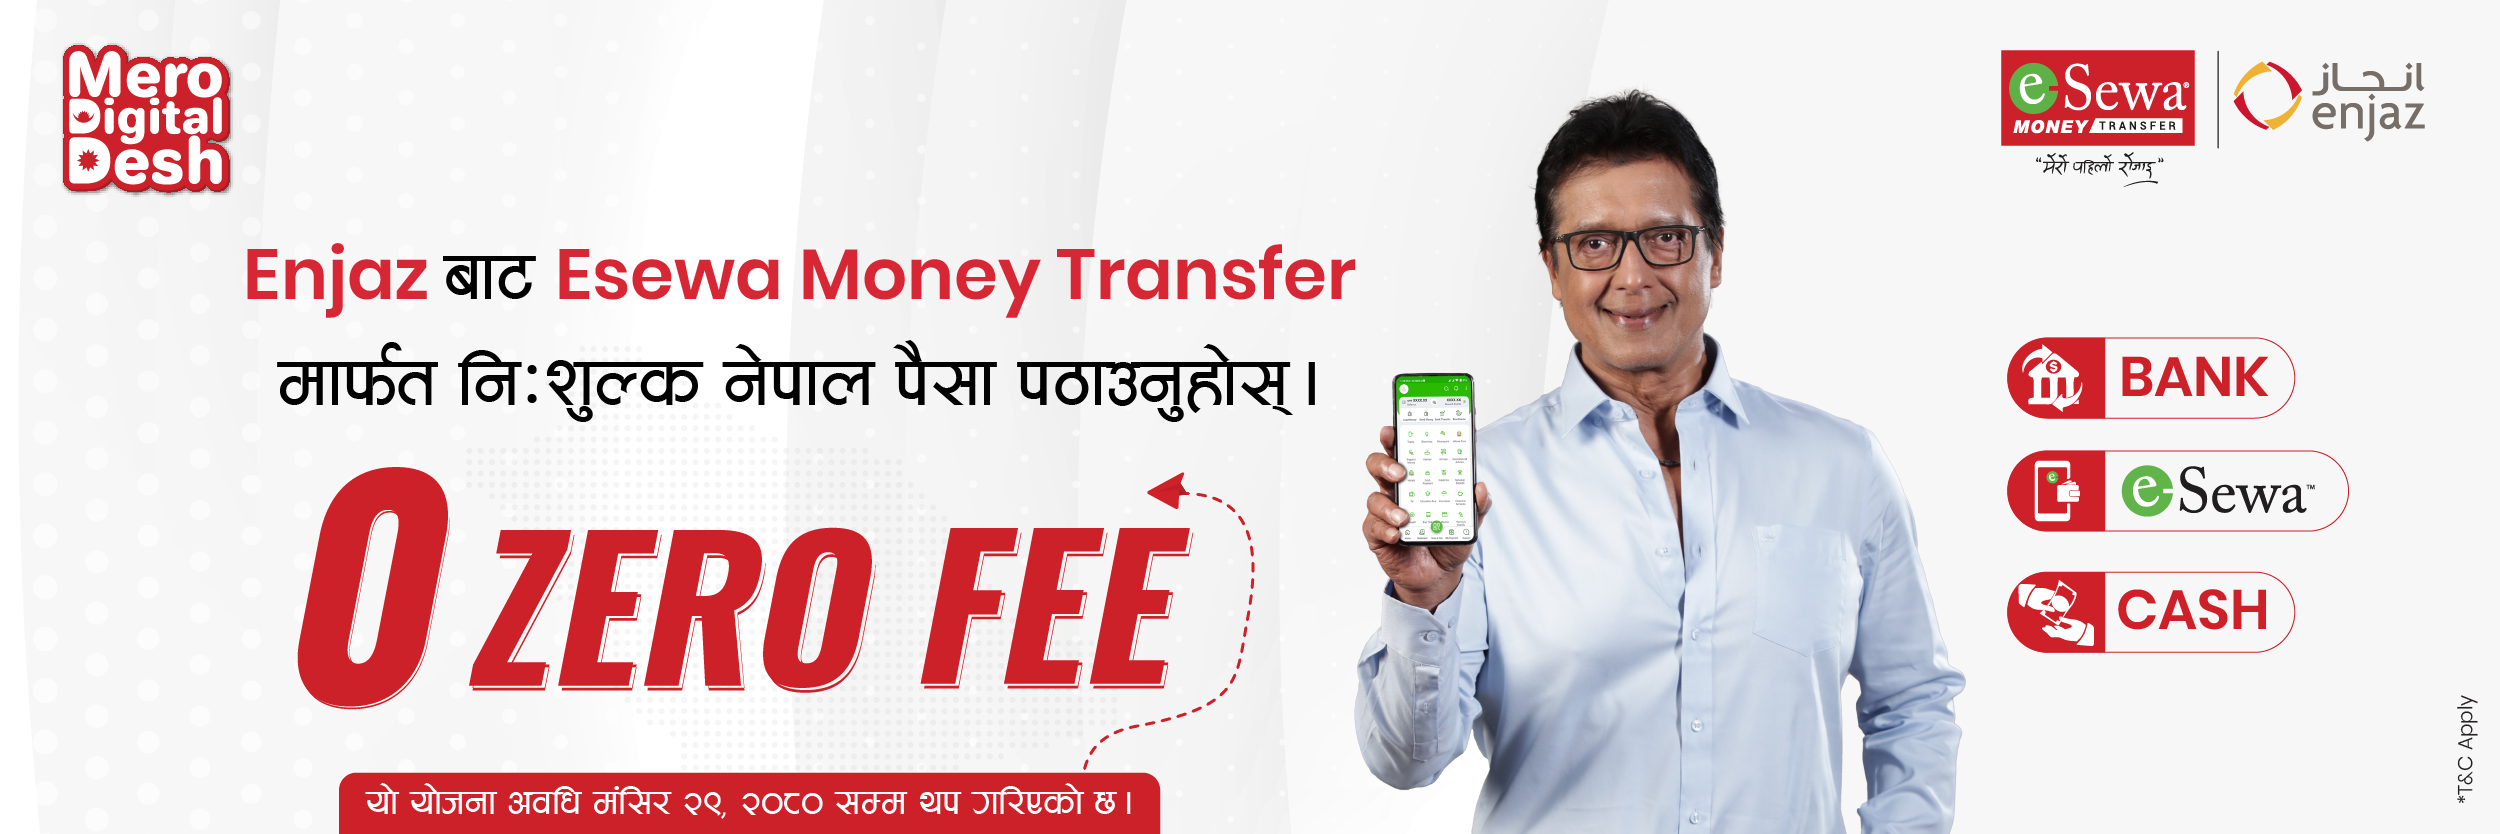 Send money to Nepal at ZERO FEE with Enjaz and Esewa Money Transfer - Banner Image